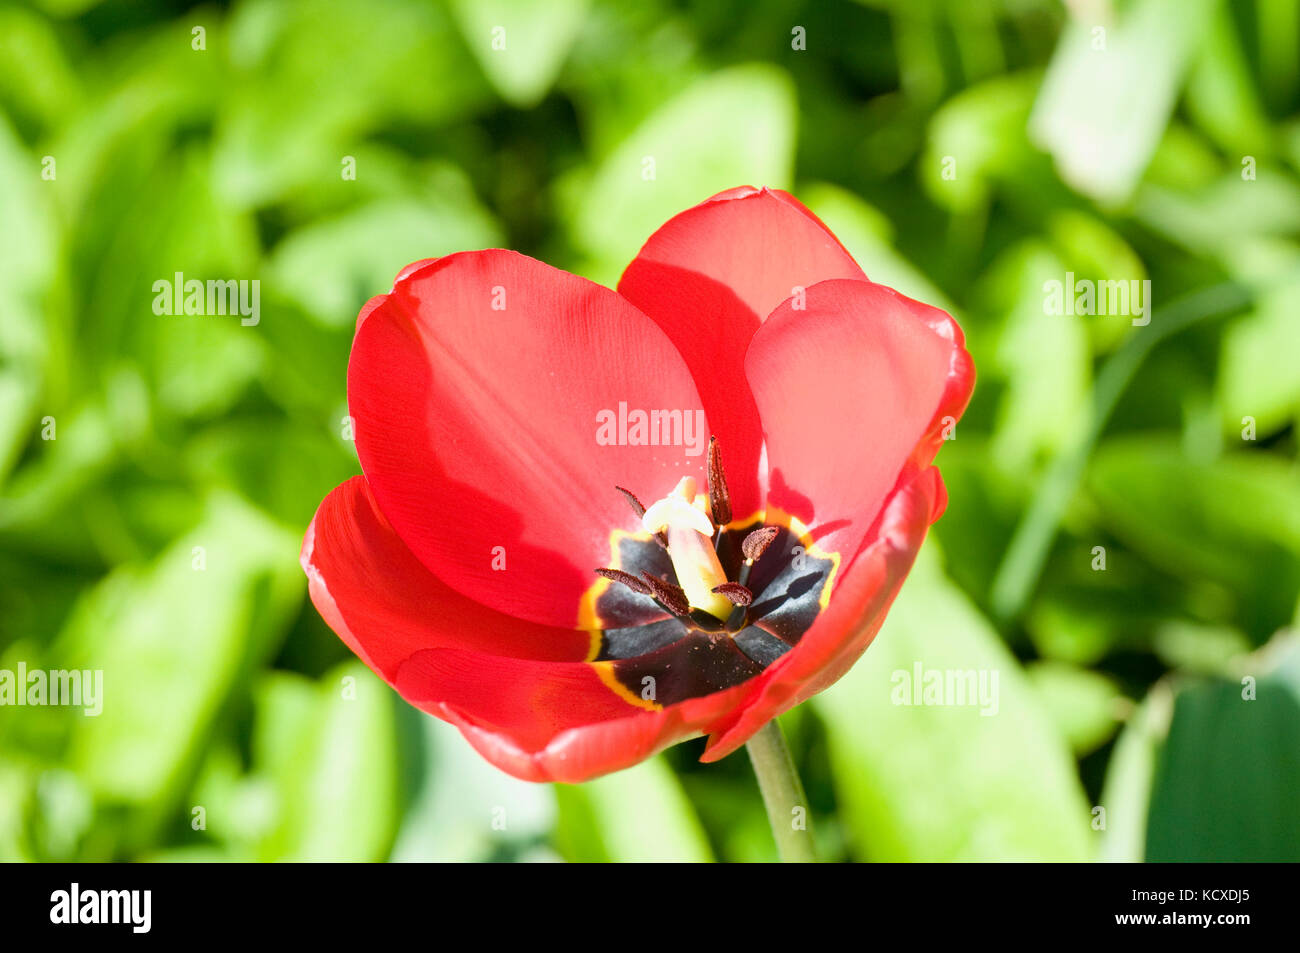 Red wild poppy in sunlight Stock Photo